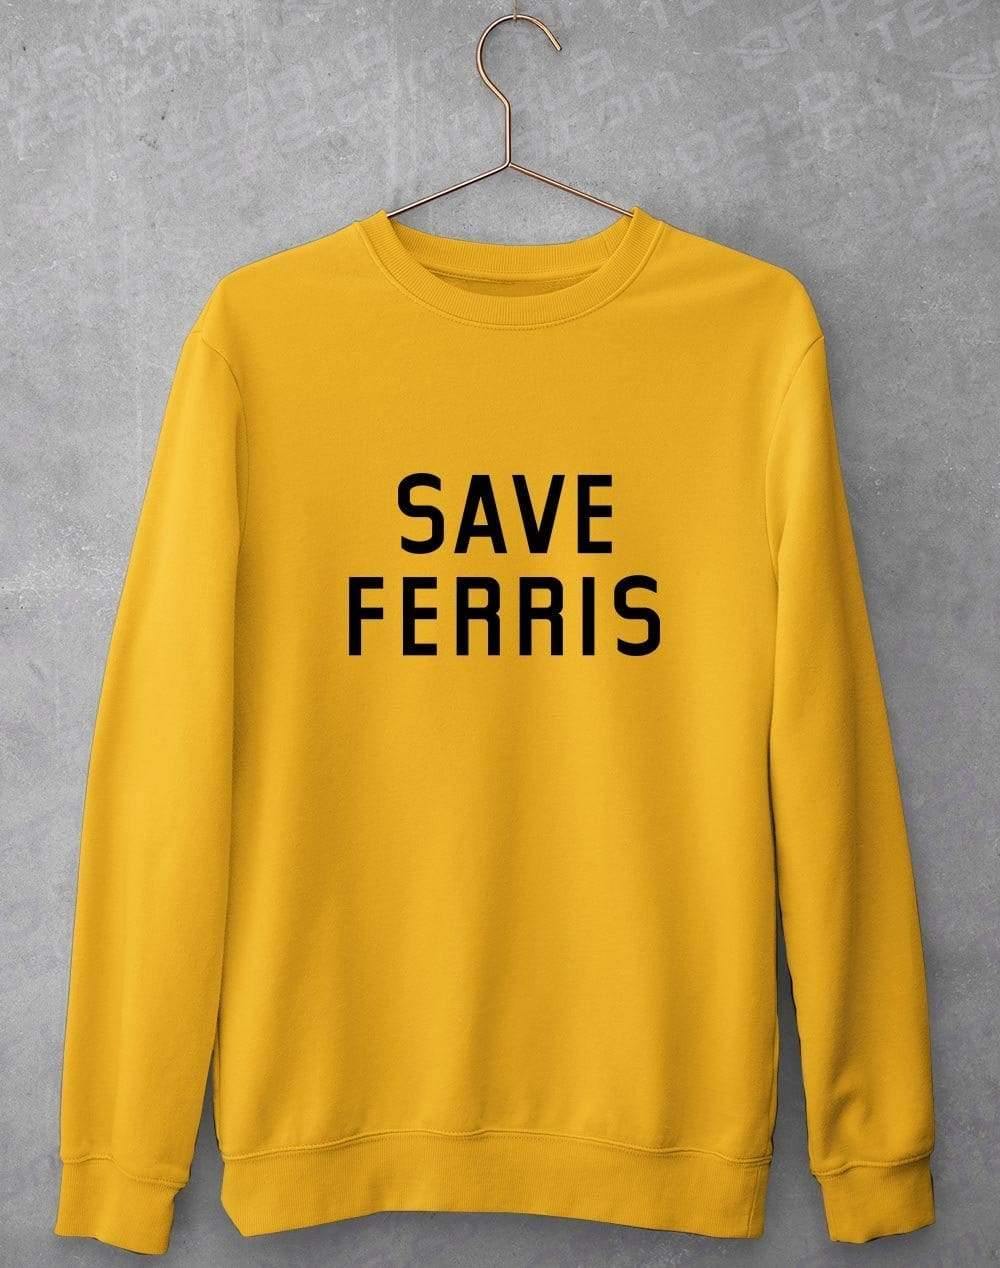 Save Ferris Sweatshirt S / Gold  - Off World Tees